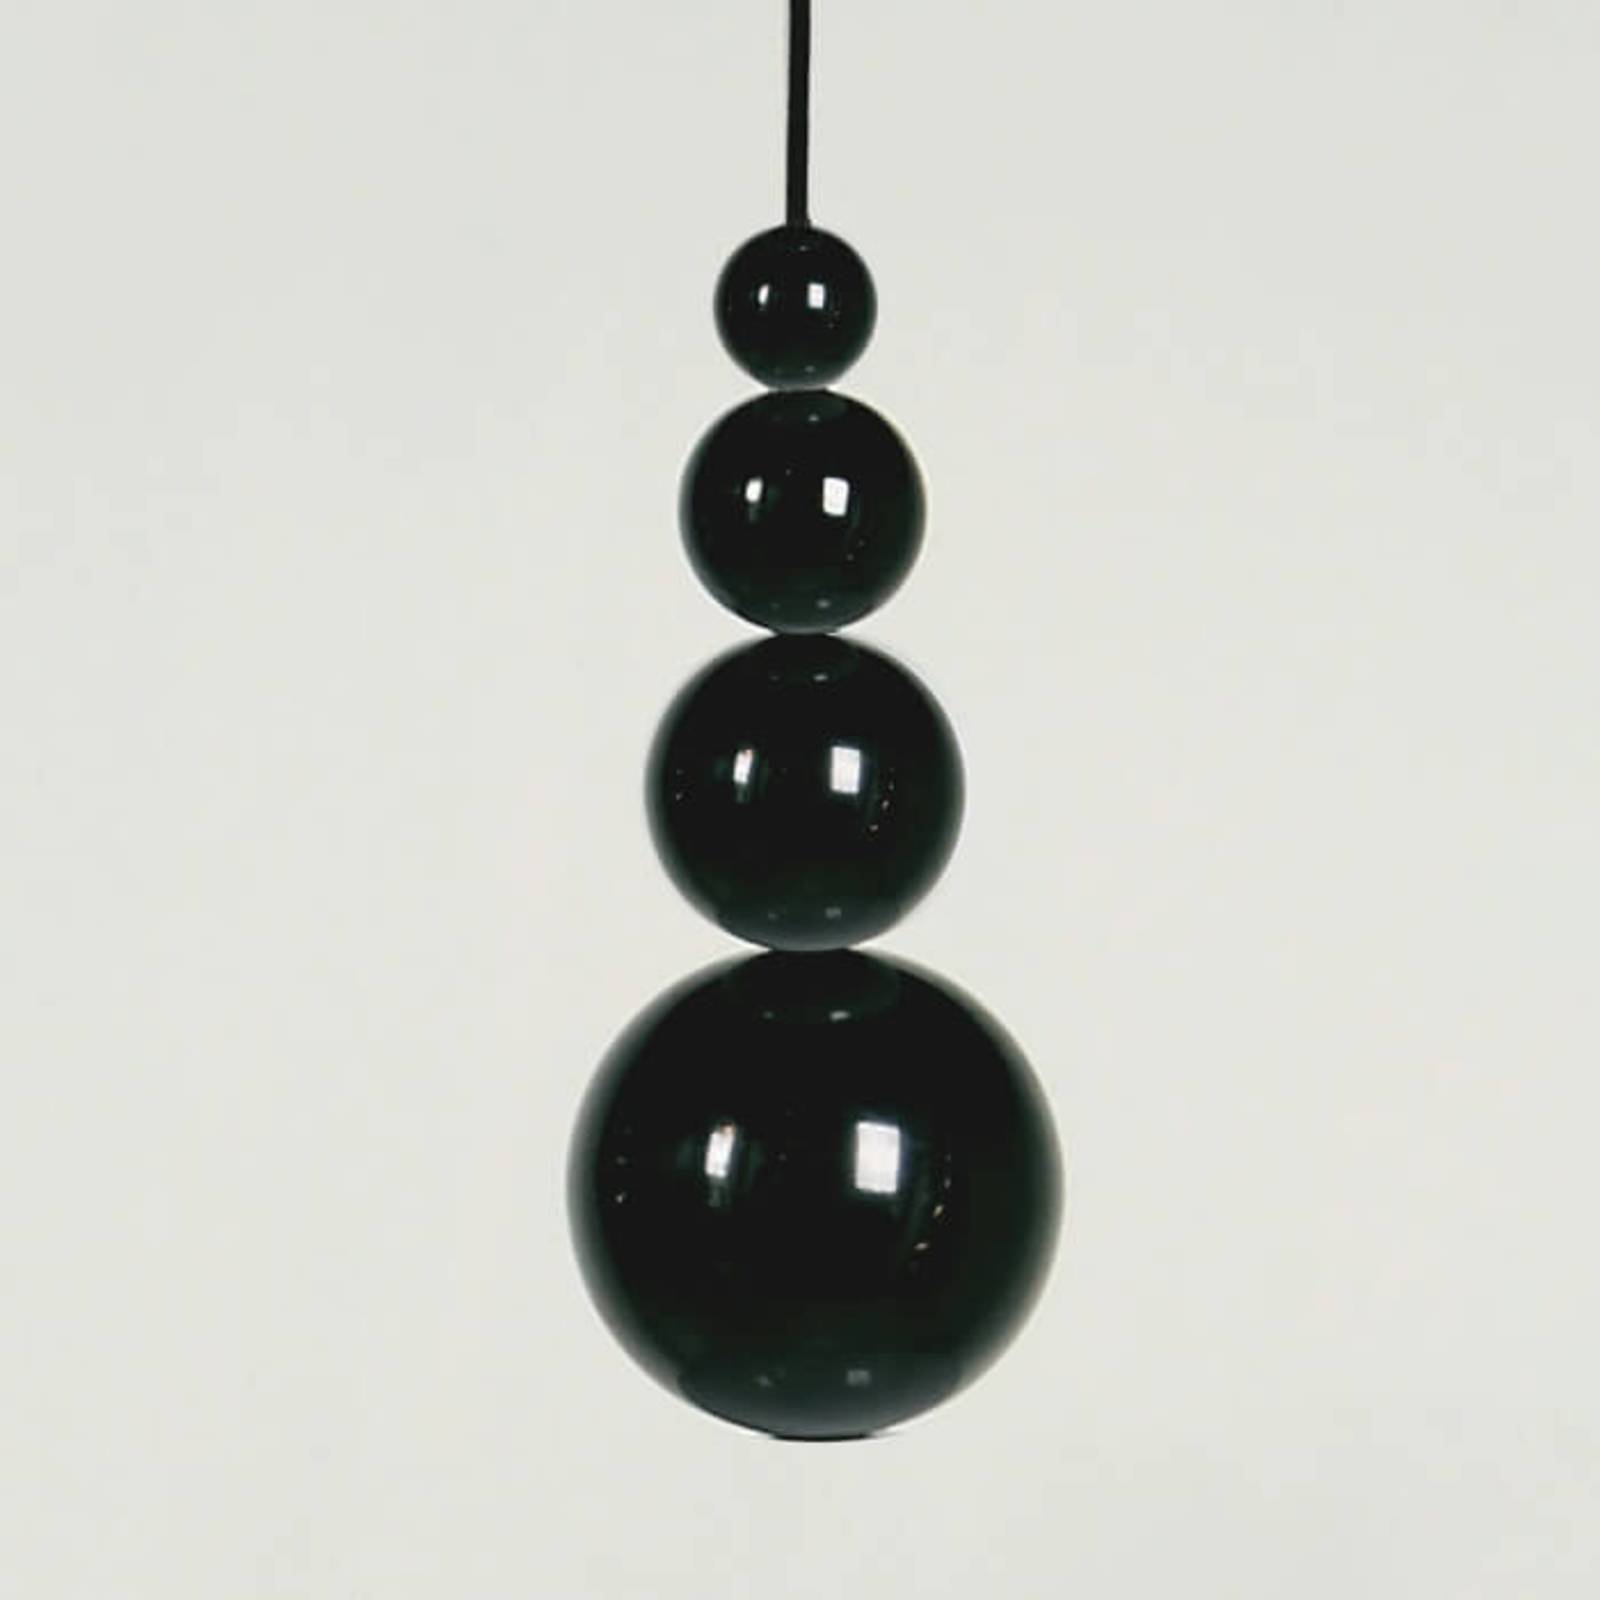 Innermost Bubble - hanglamp in zwart